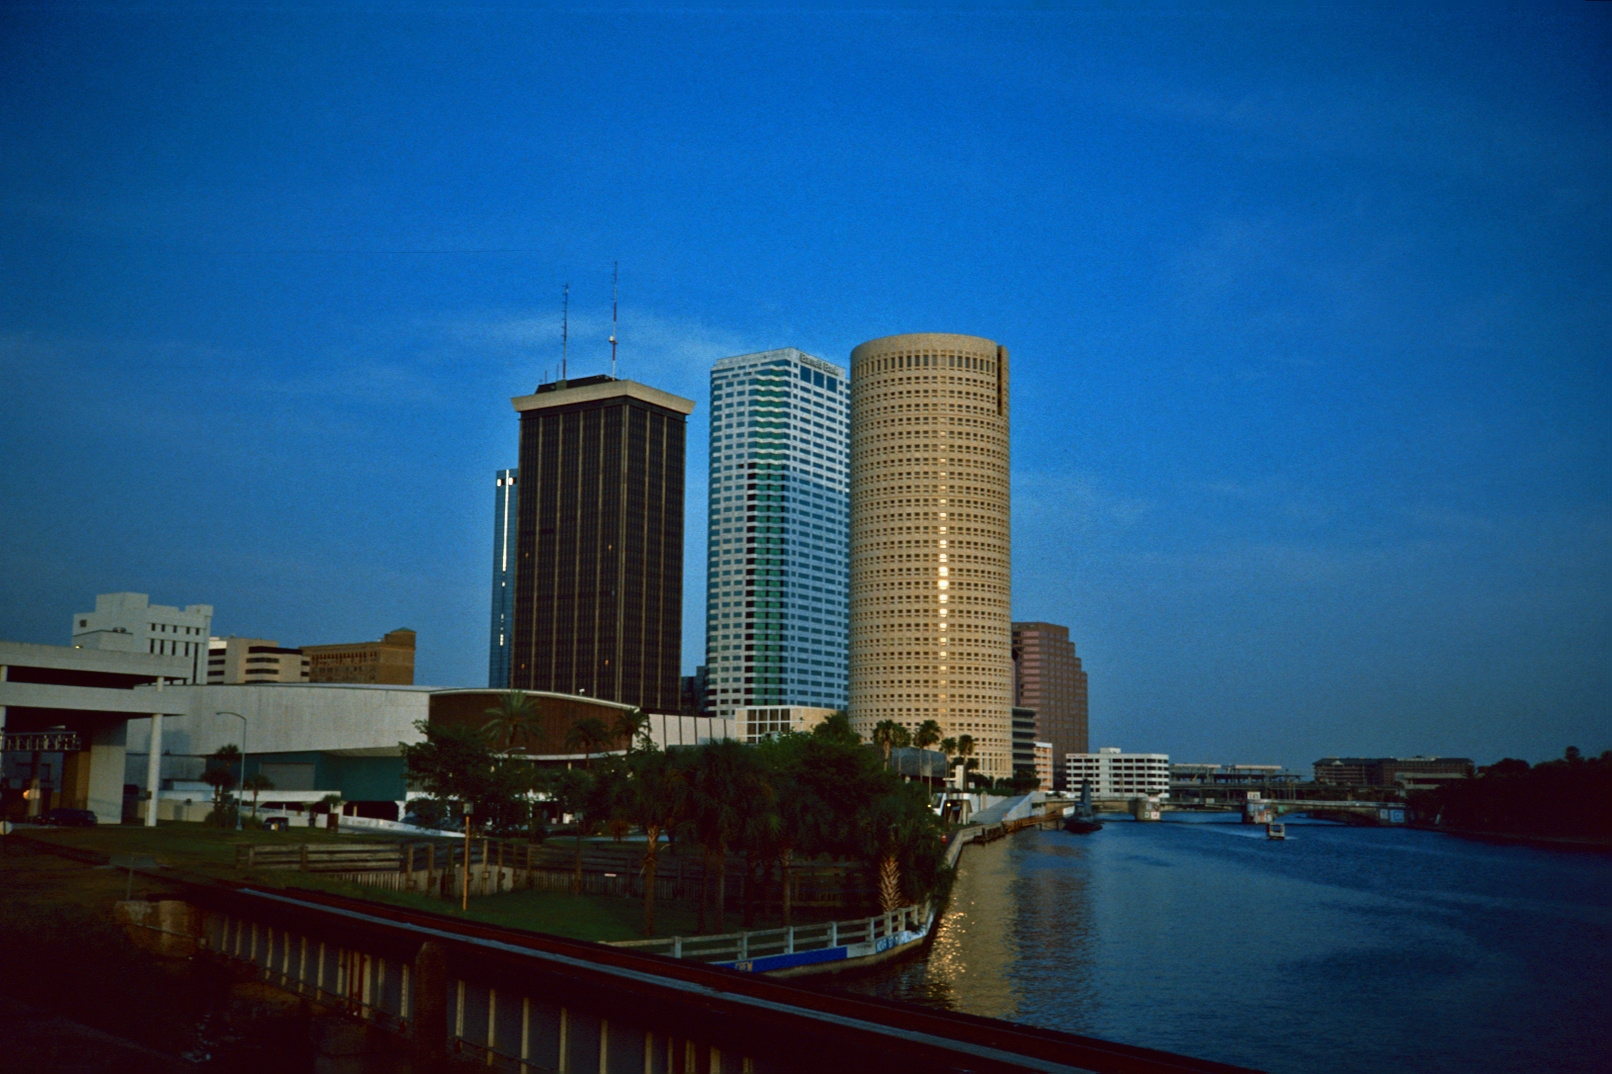 Tampa, FL - 1989